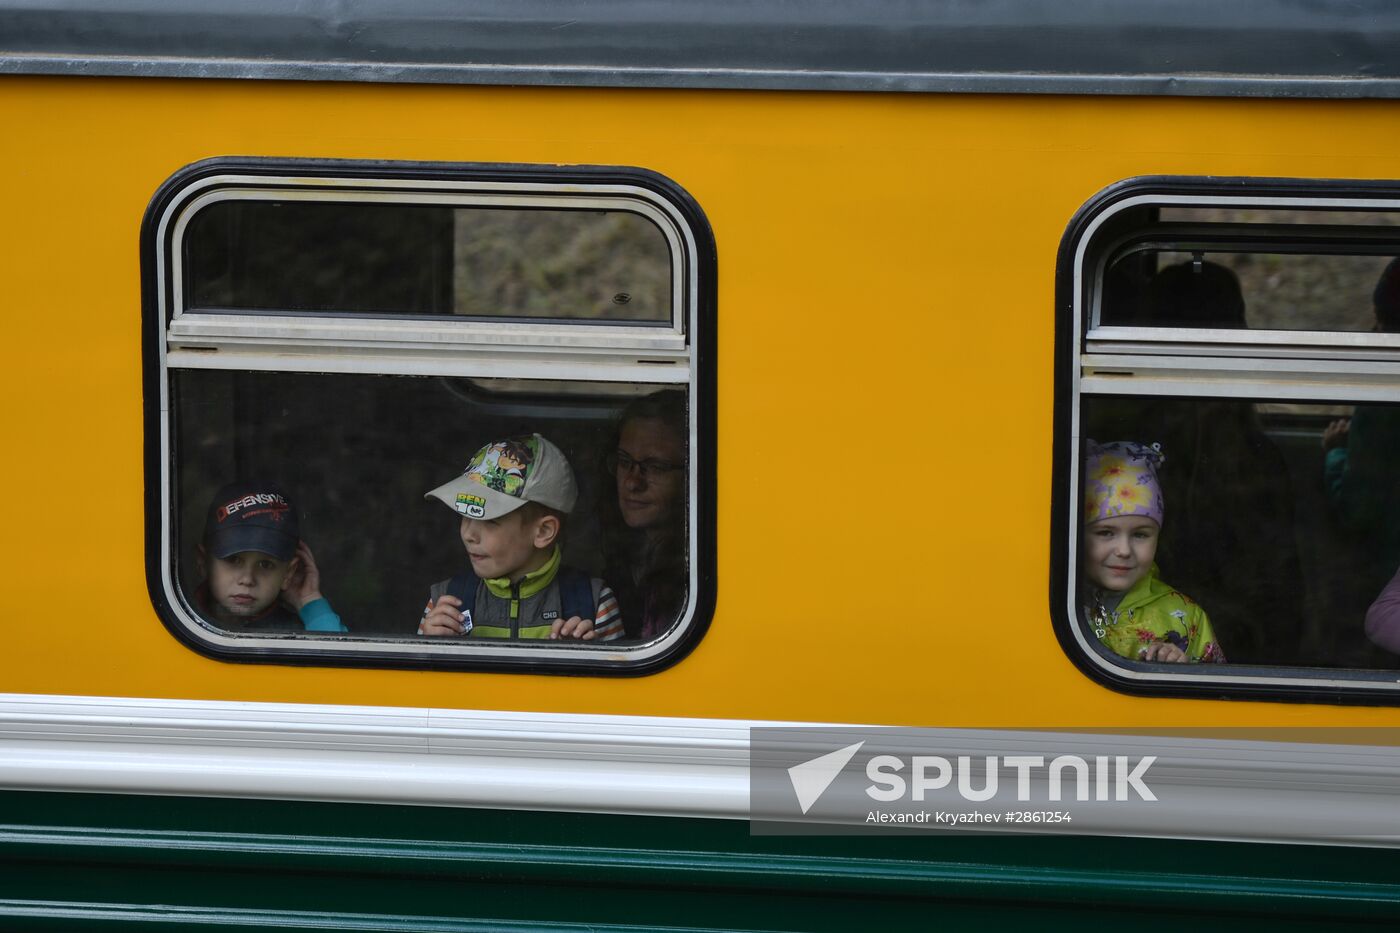 Summer season kicks off at Novosibirsk children's railway